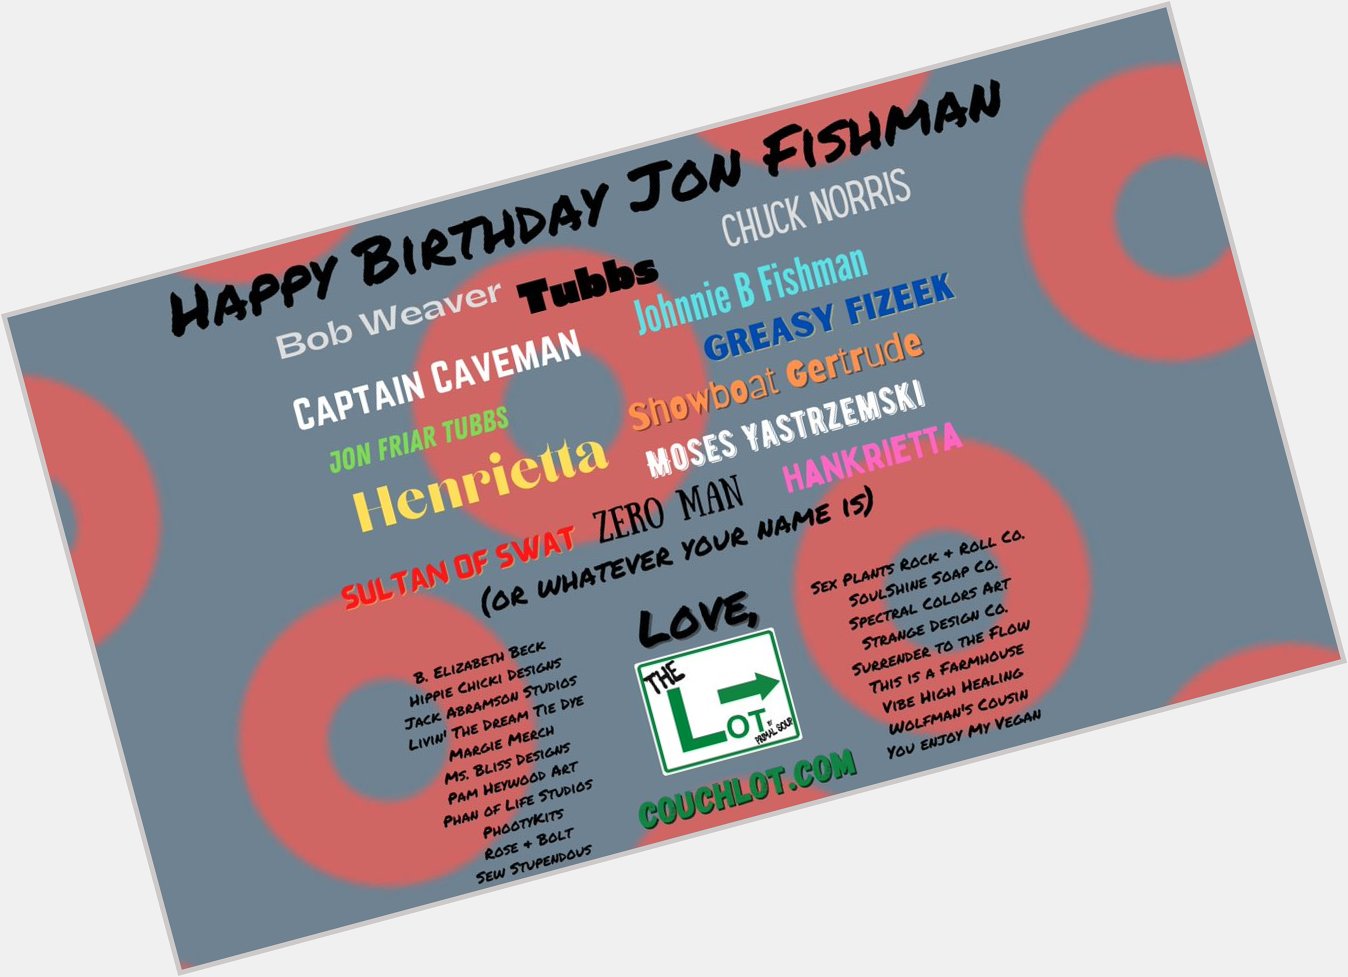 Happy Birthday Jon Fishman!!      